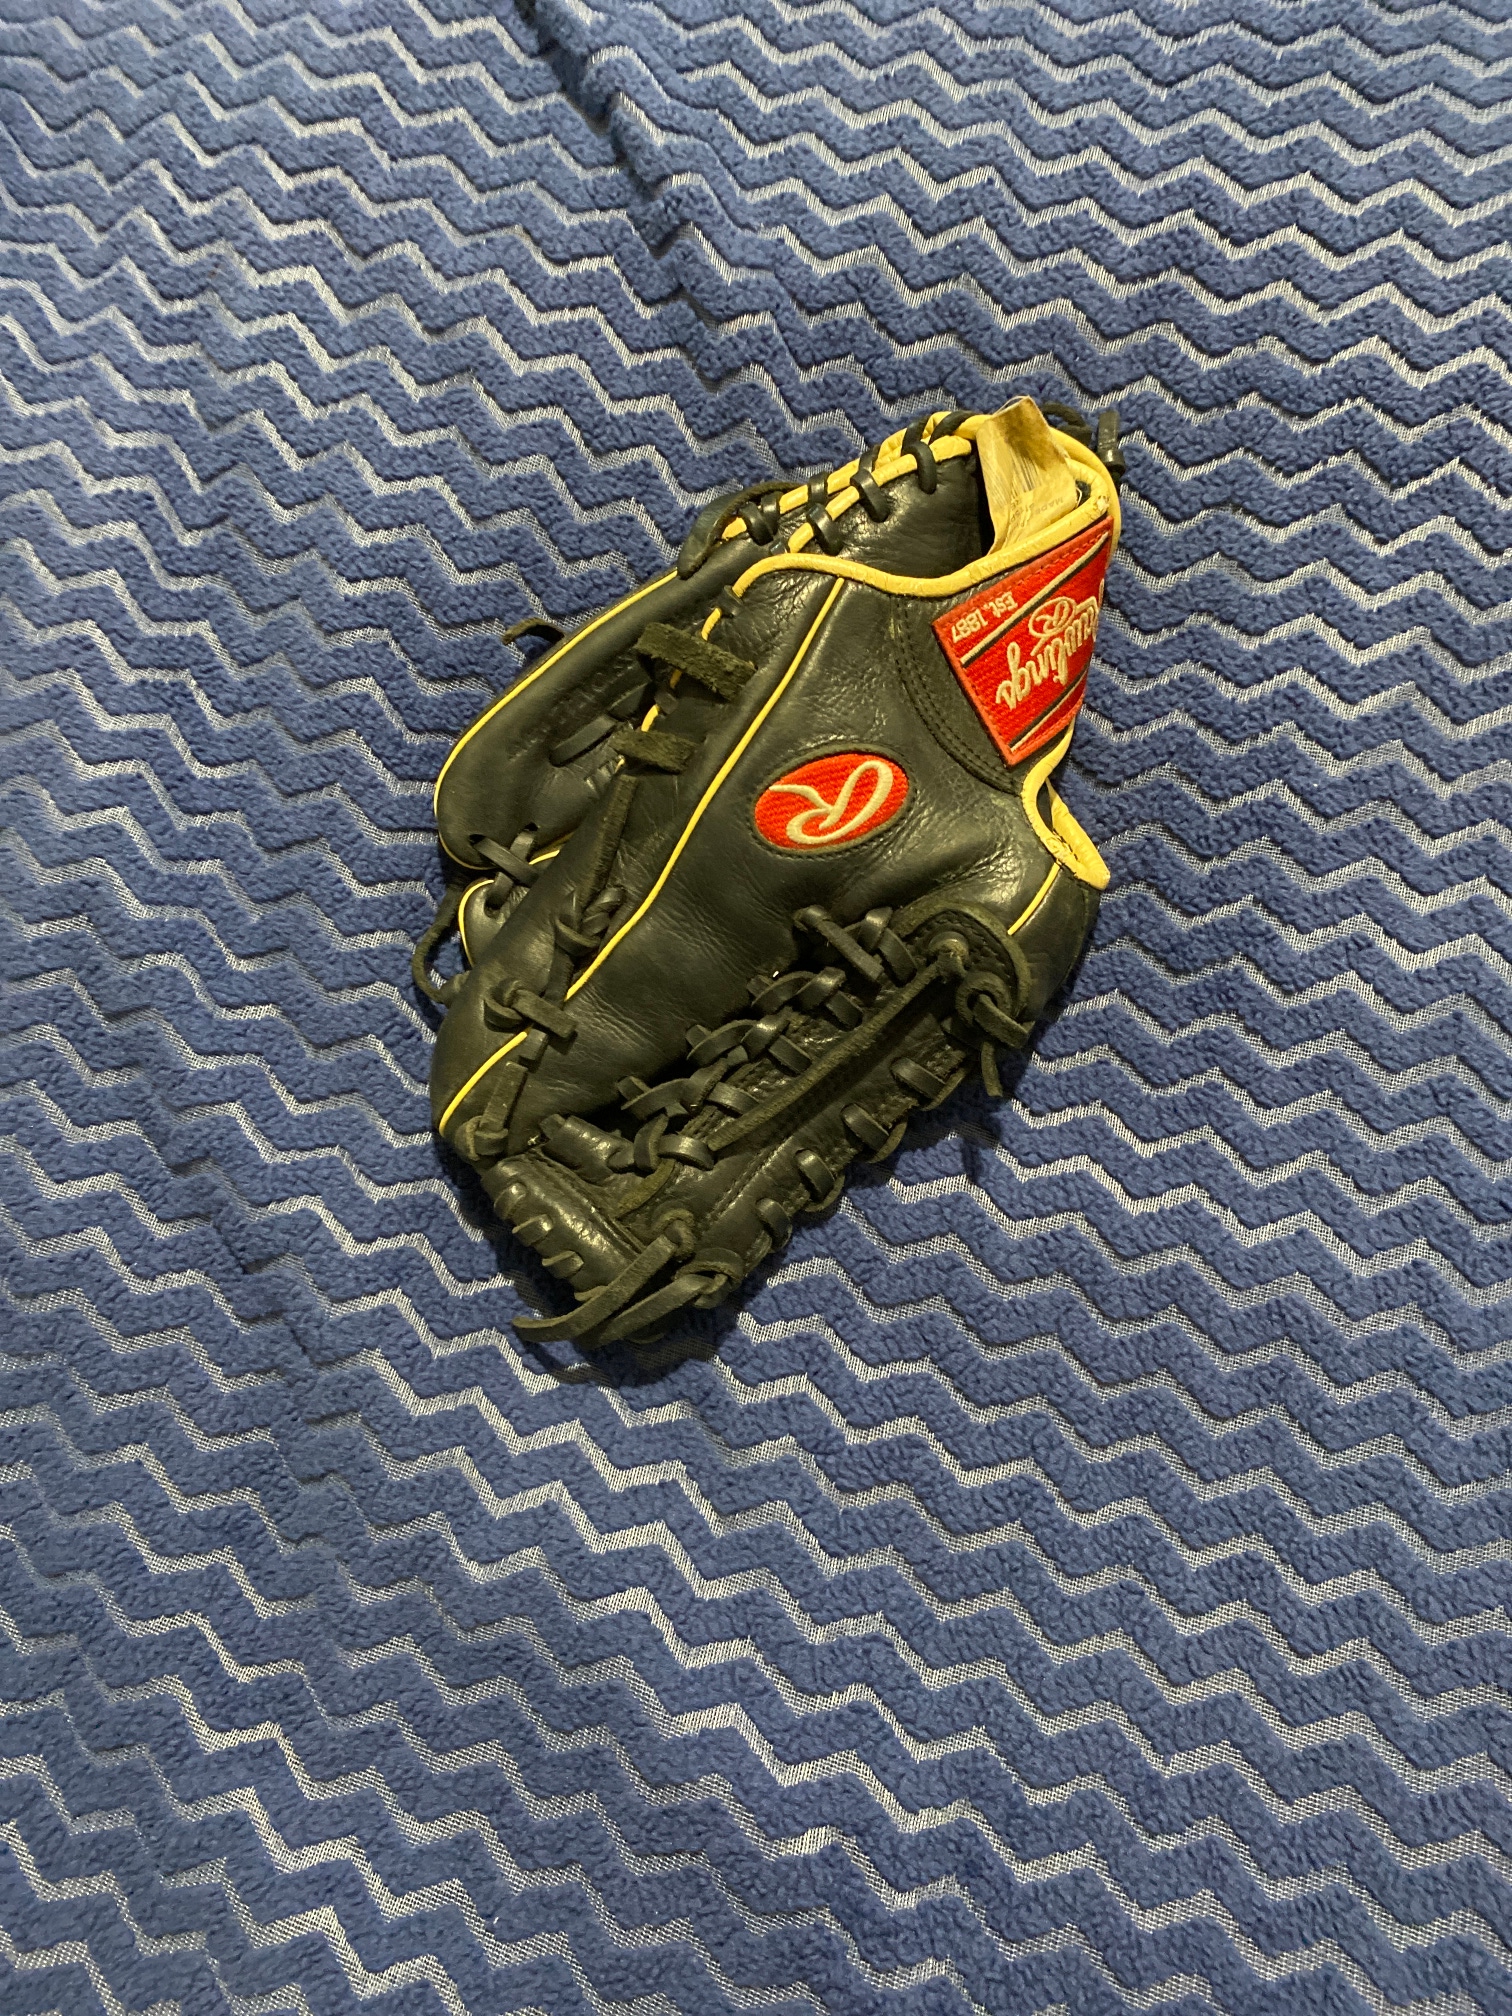 Used 2015 Rawlings Right Hand Throw Infield Gamer Baseball Glove 11.5"